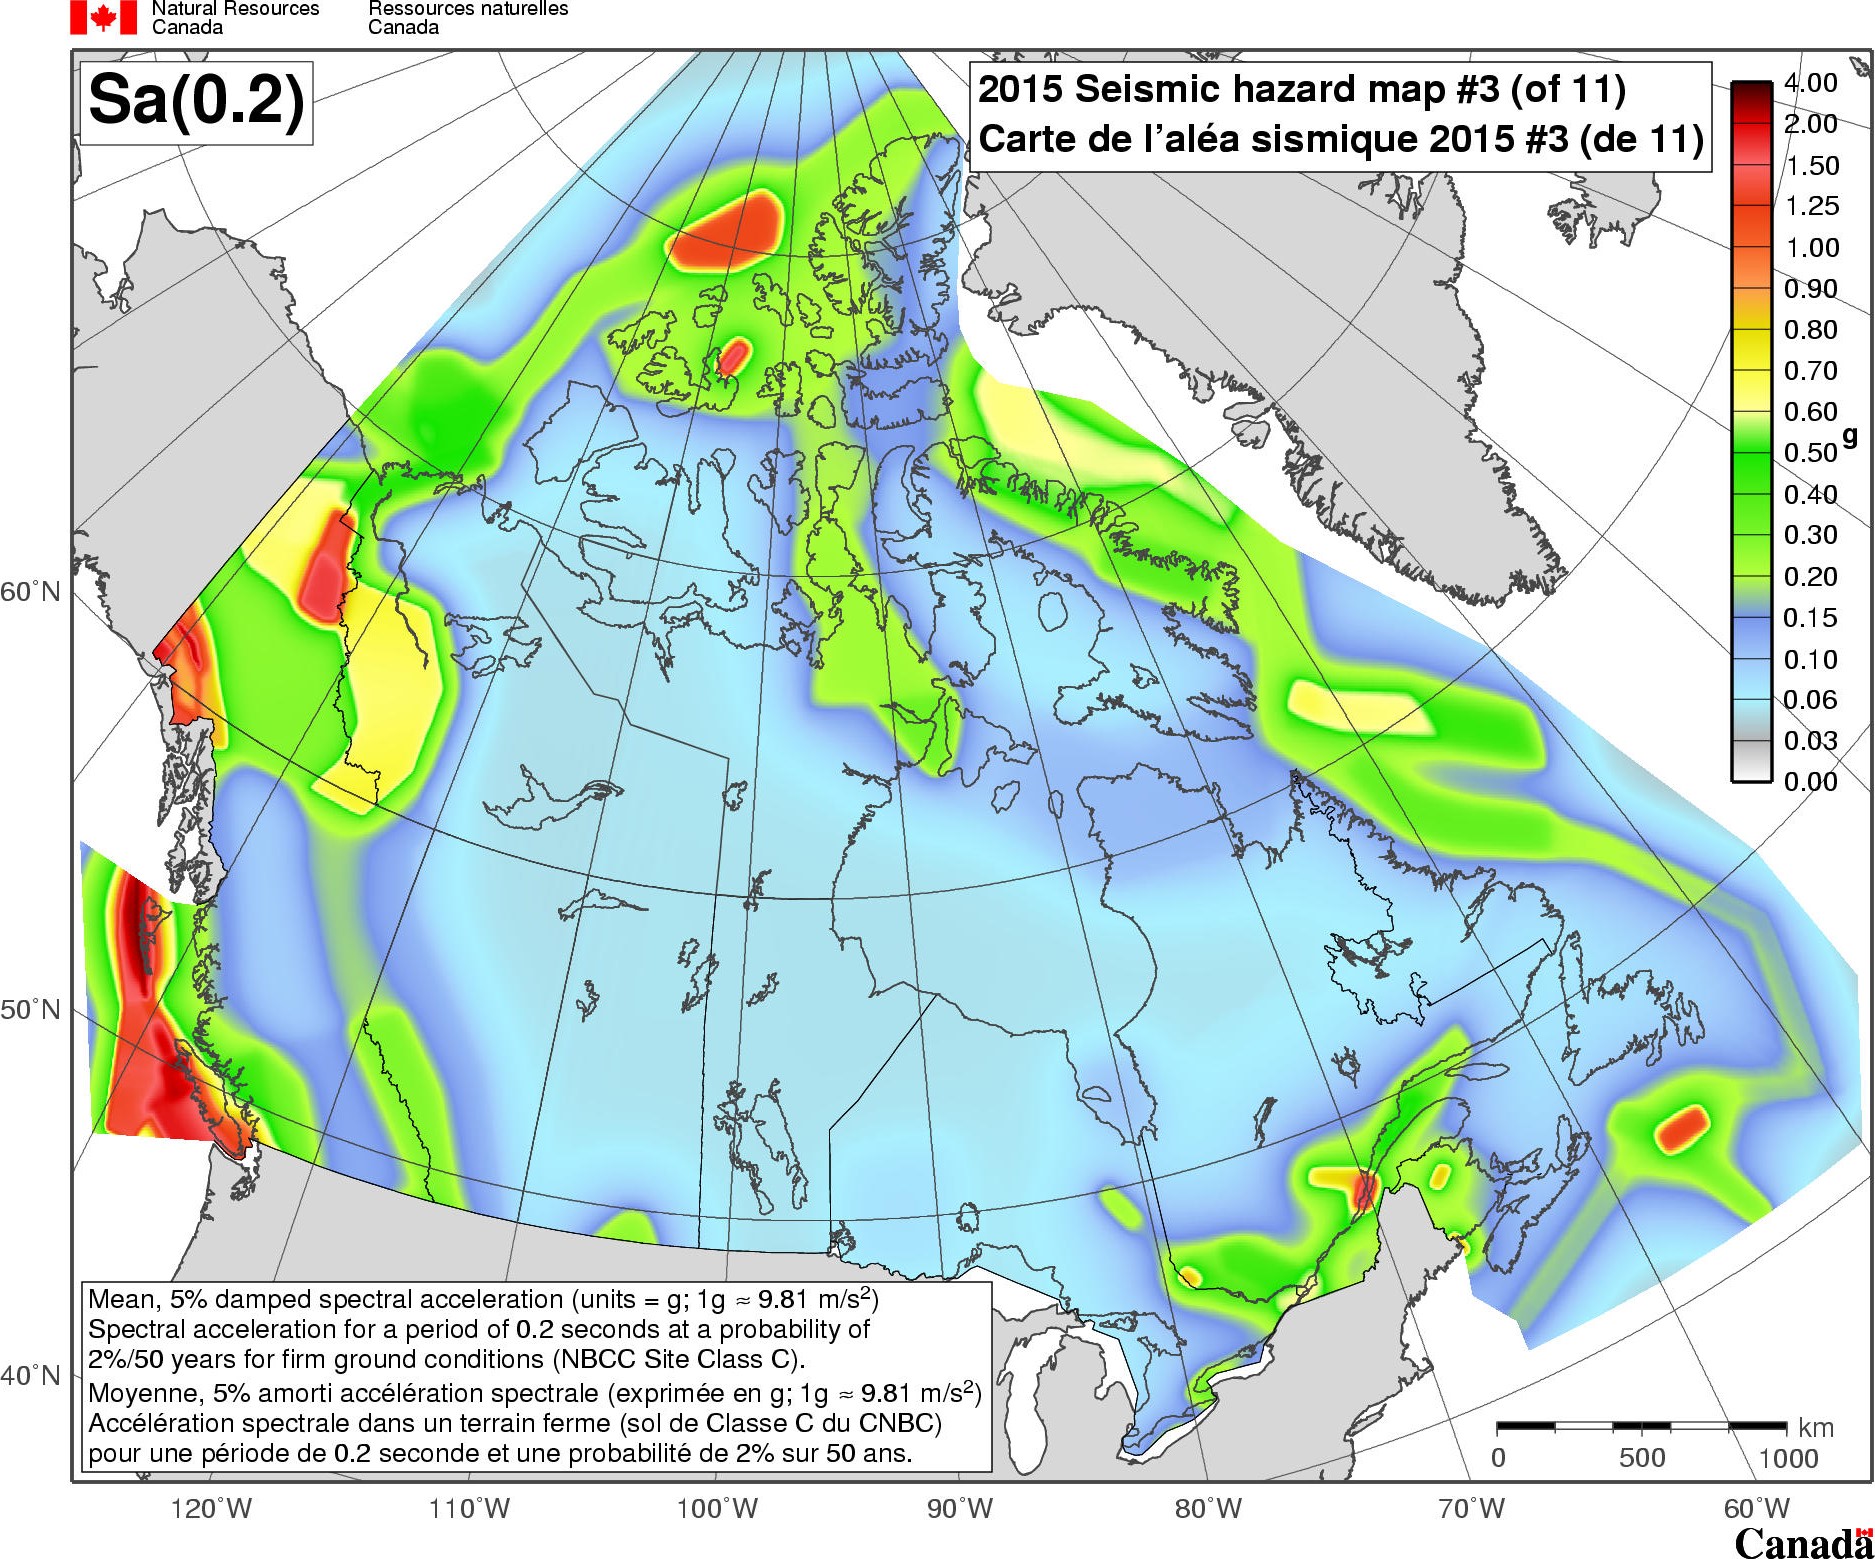 2015 NBCC seismic hazard map - Sa(0.2)